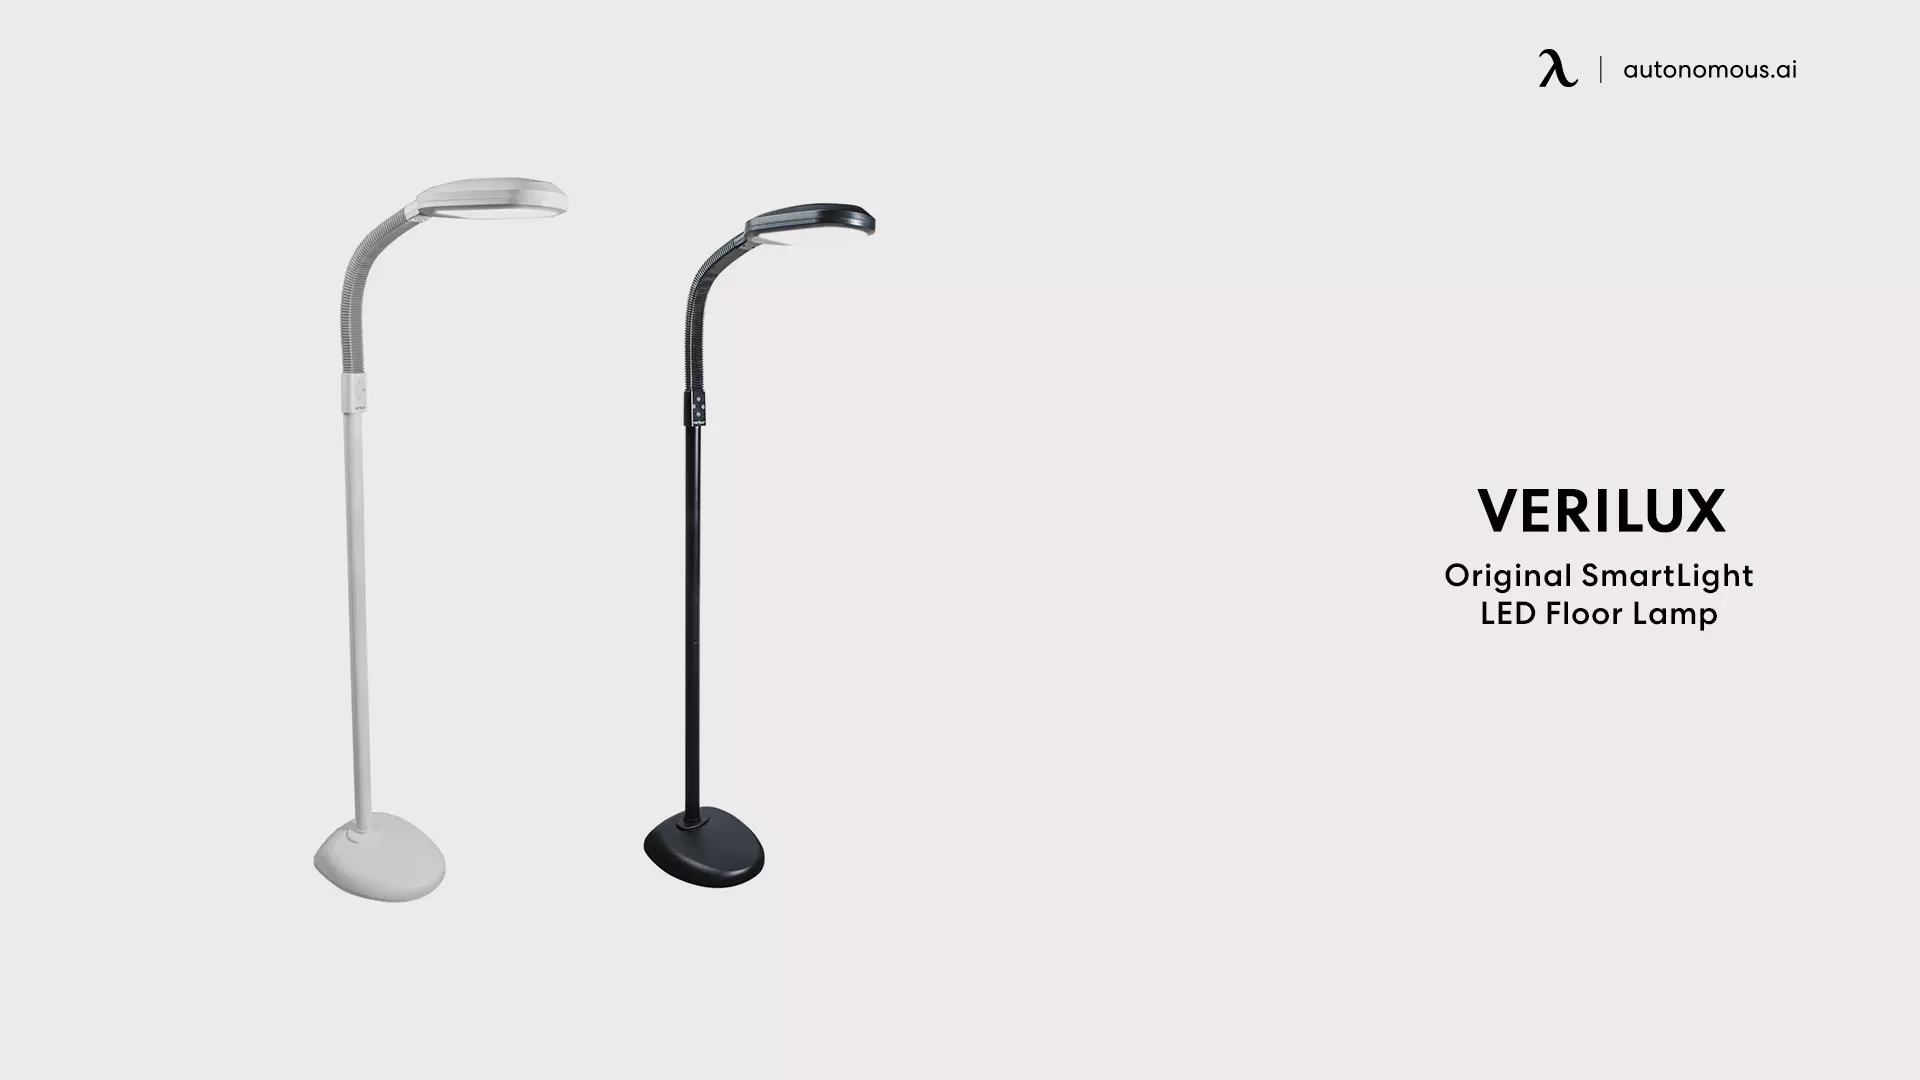 Original SmartLight LED Floor Lamp by Verilux